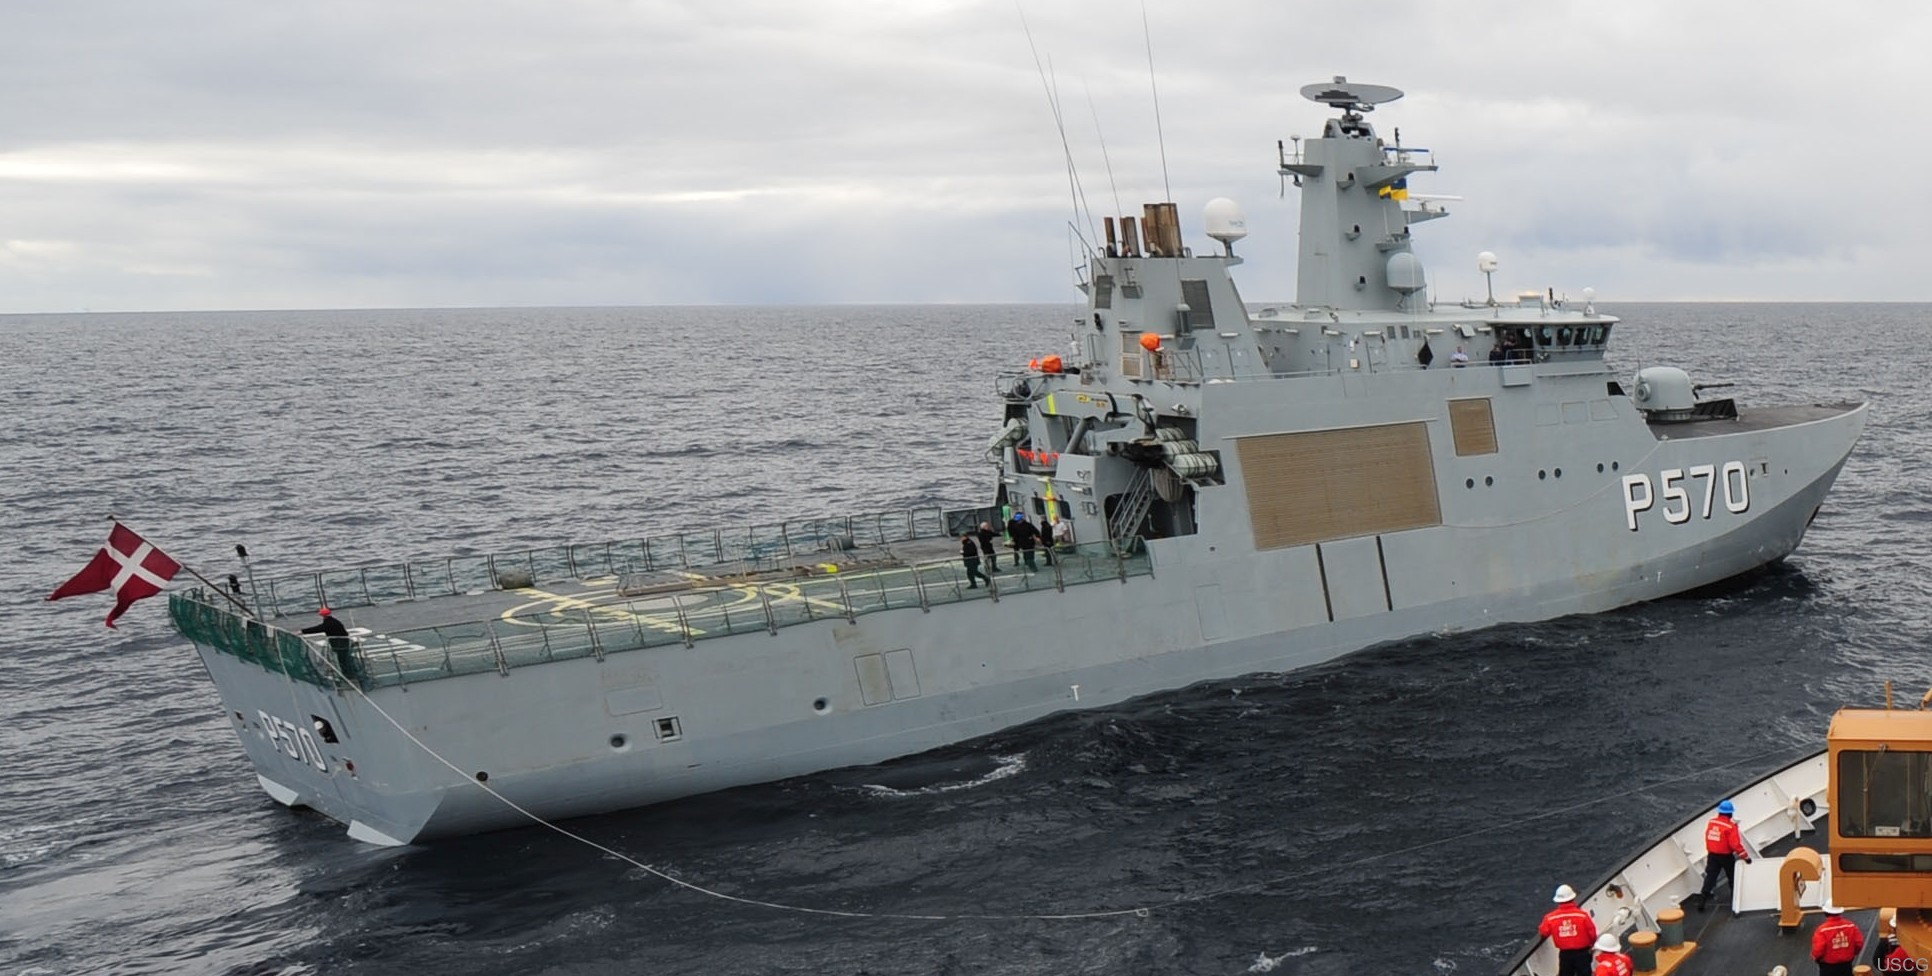 p-570 hdms knud rasmussen class offshore patrol vessel royal danish navy inspektionsfartøj 23